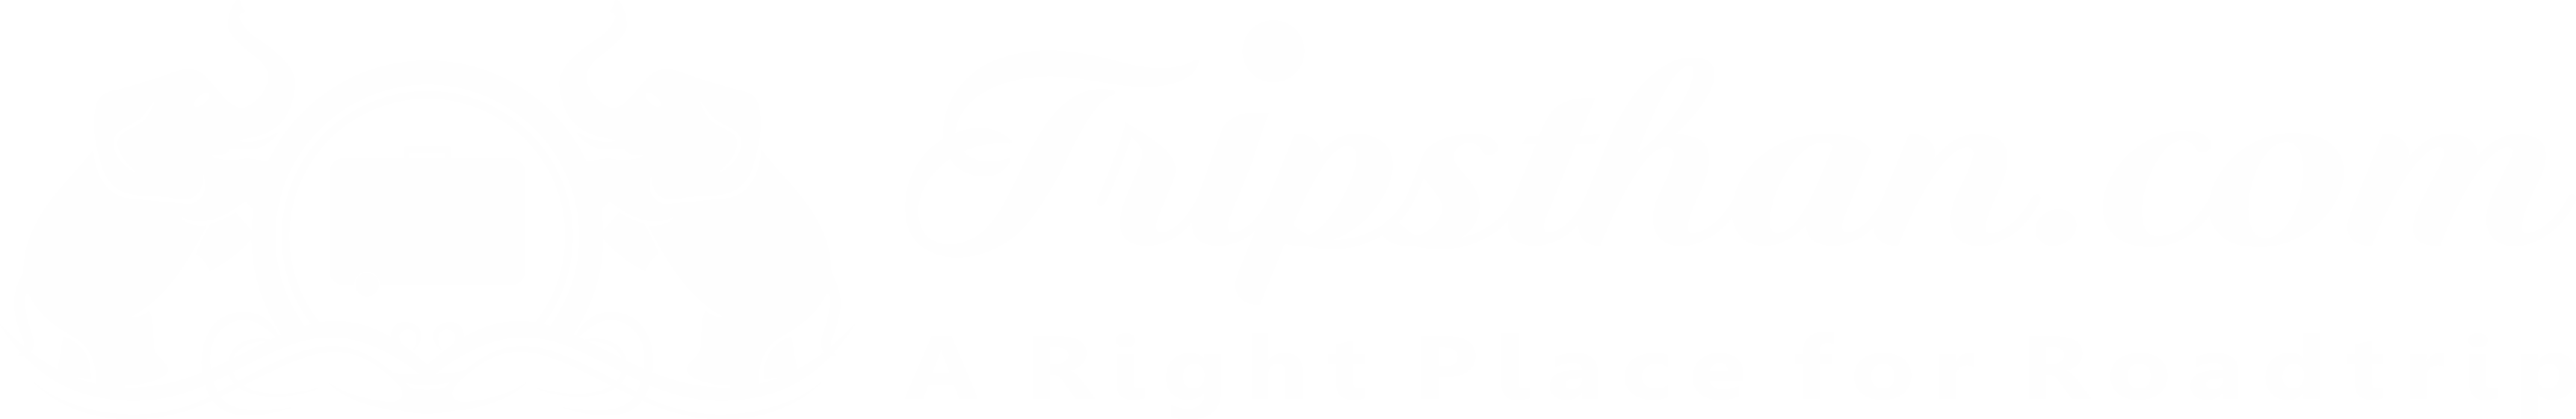 Tripsthan-logo